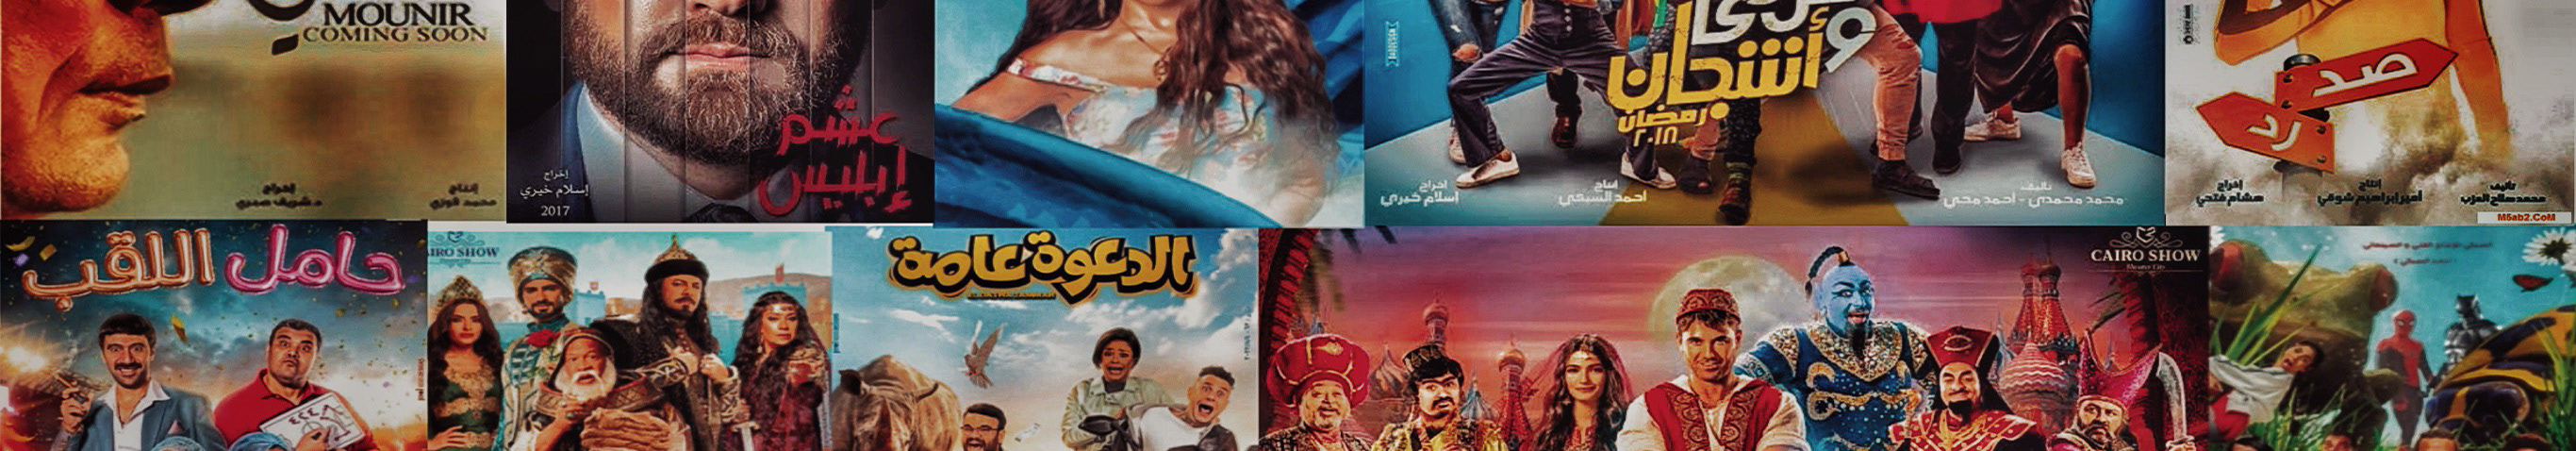 Karim Almahdy's profile banner